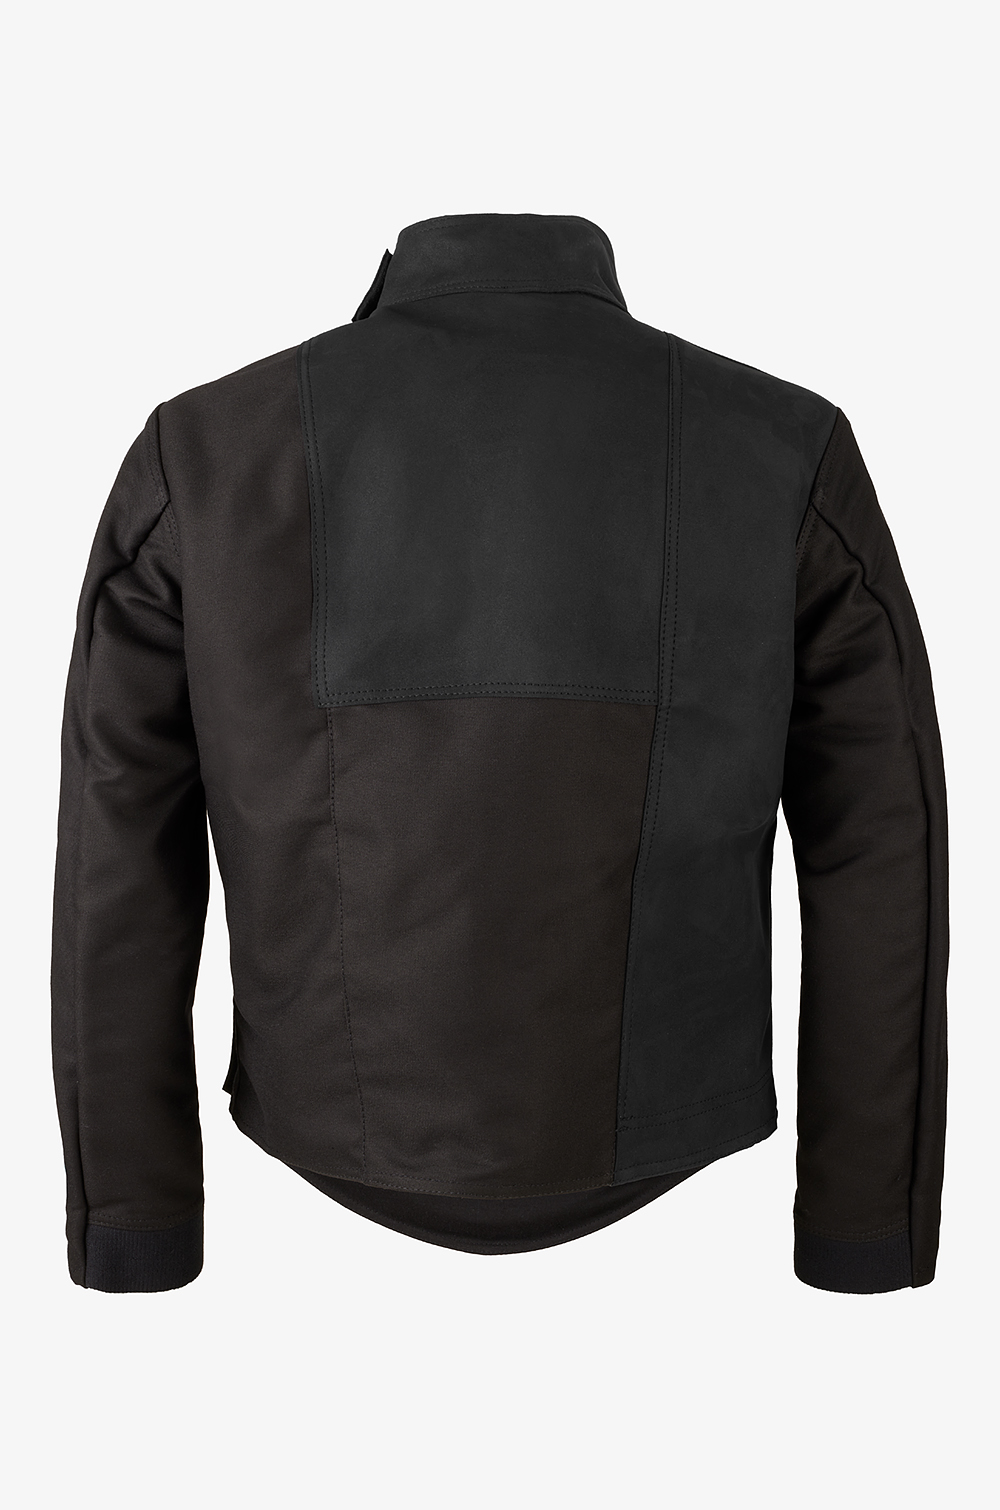 BasicPlus Leather Coach Jacket Women